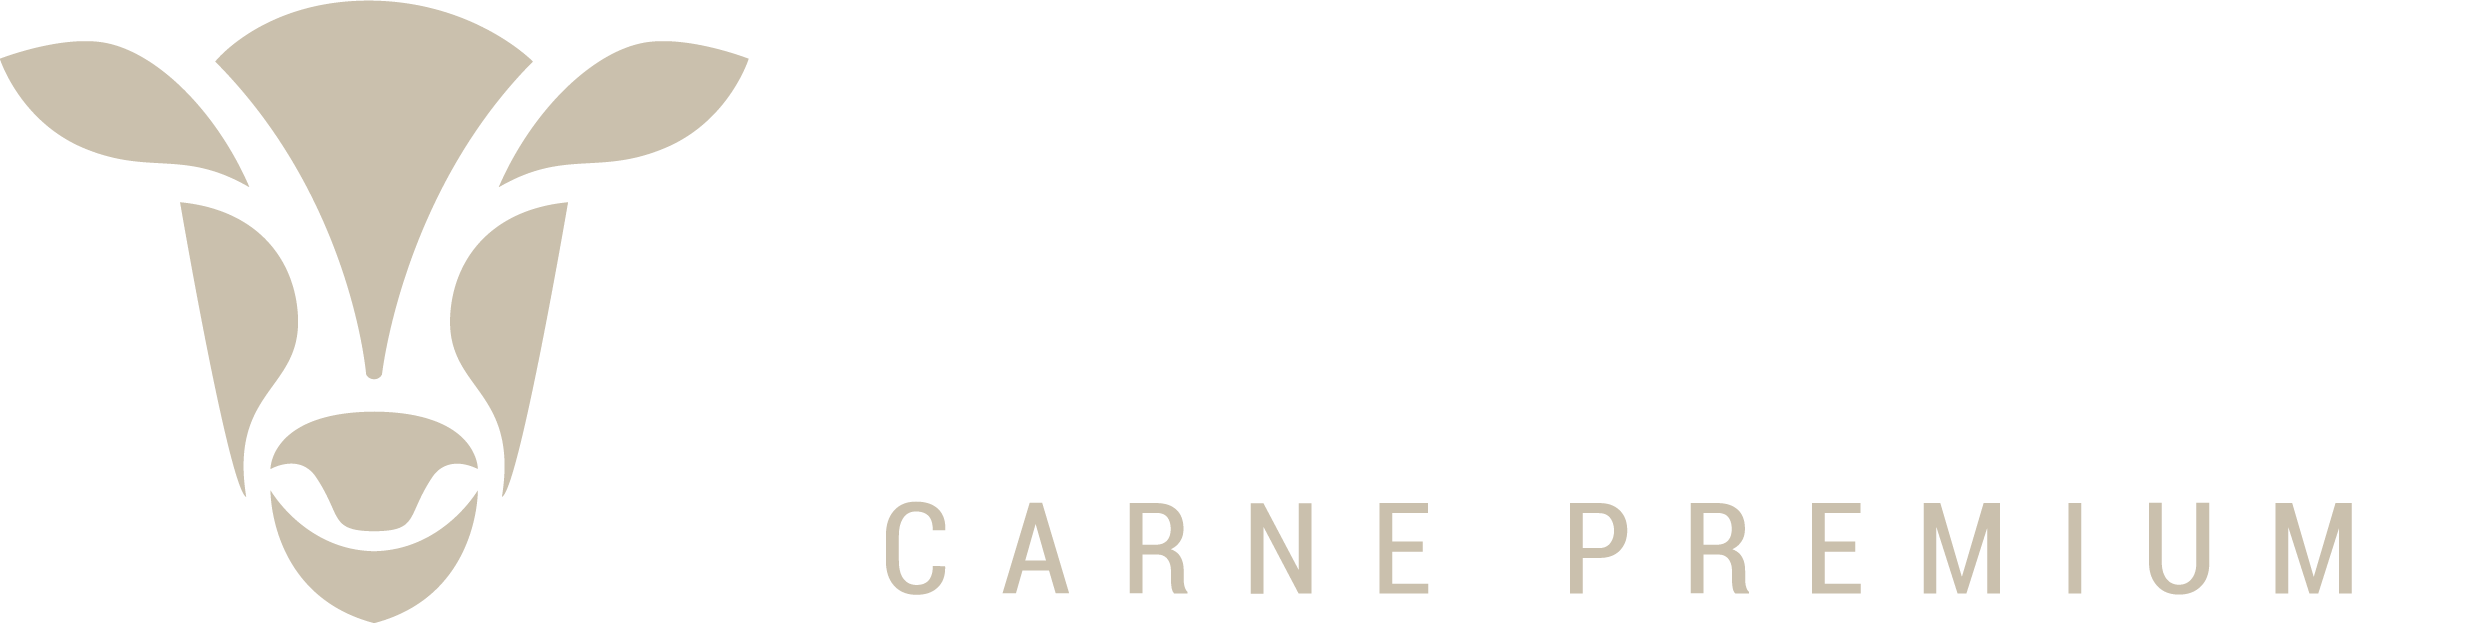 Pampeana Carnes logo white